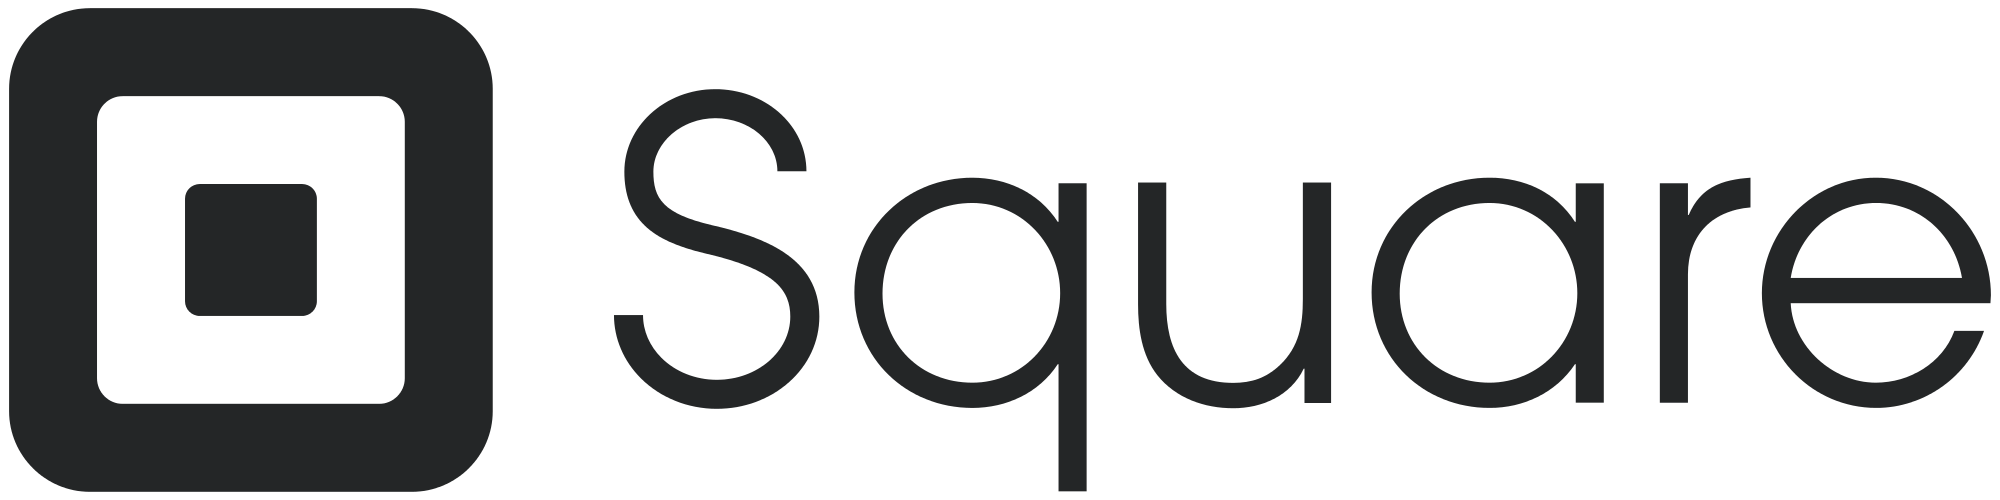 We Accept Cash App Logo - Square Inc.(NYSE:SQ): Square Inc (SQ) Hints at Savings, Investments